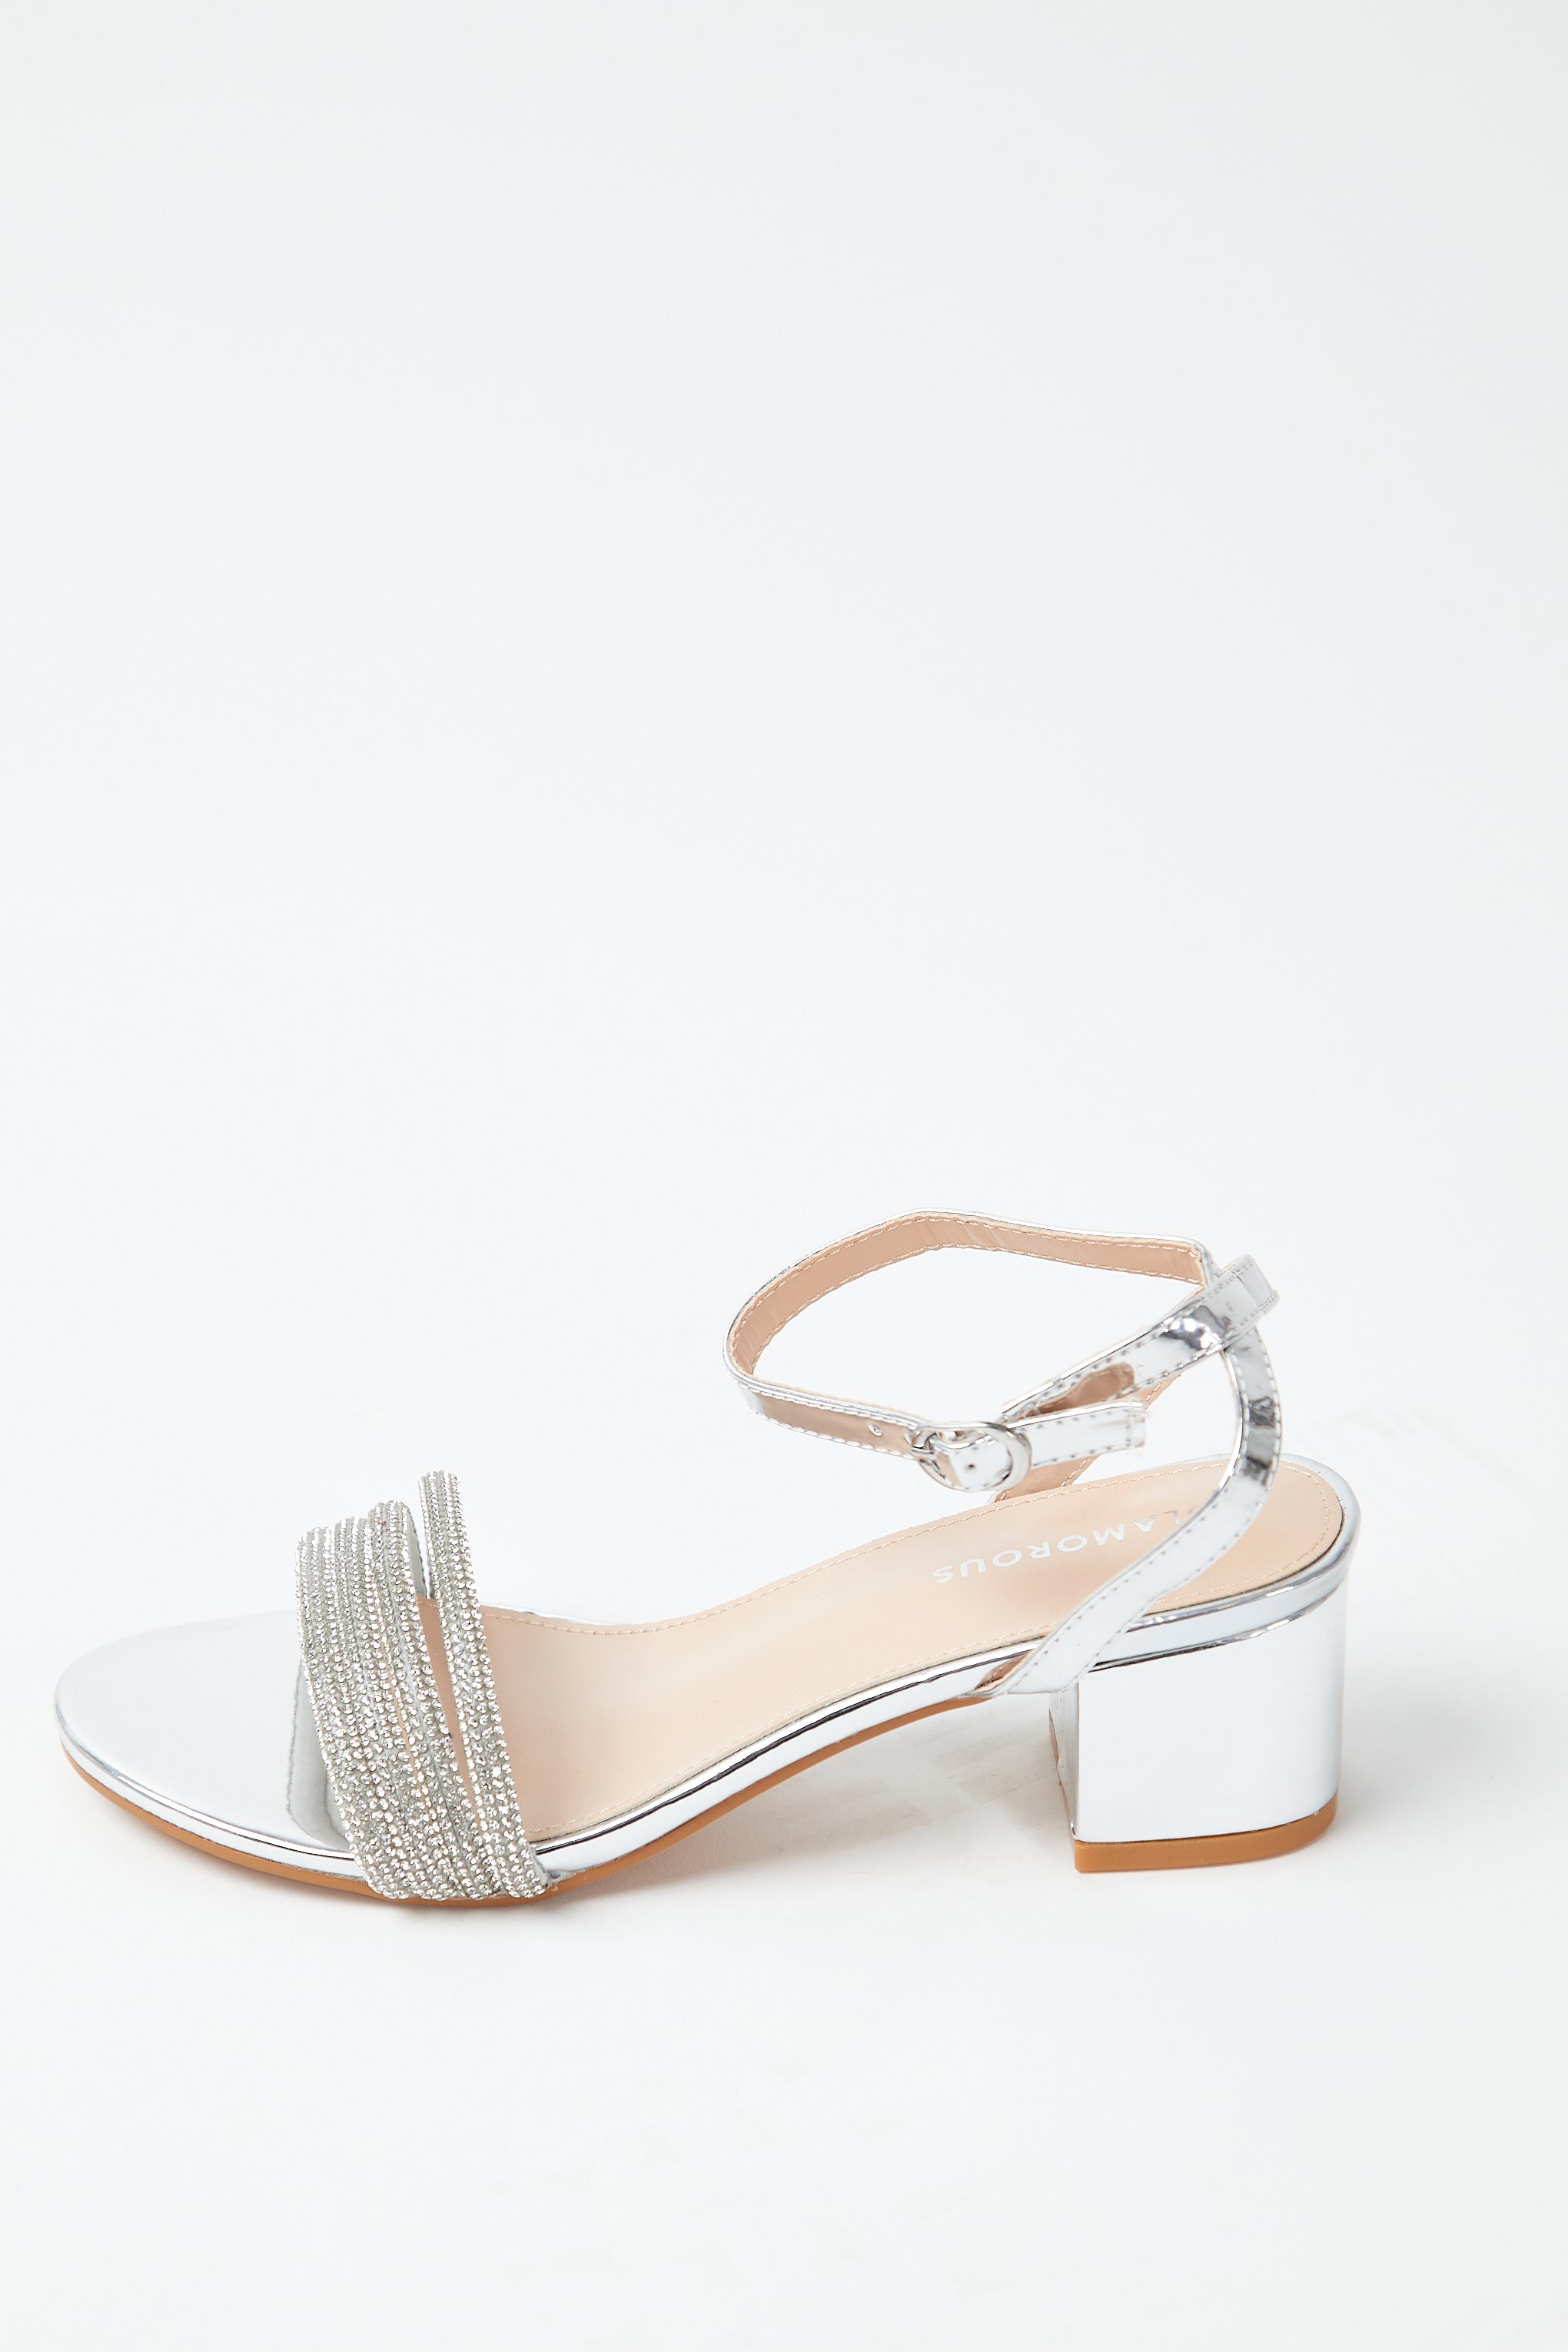 Women Pointy Toe Glitter Party Sandals Mid Low Block Heel Ankle Strap  Sandals | eBay